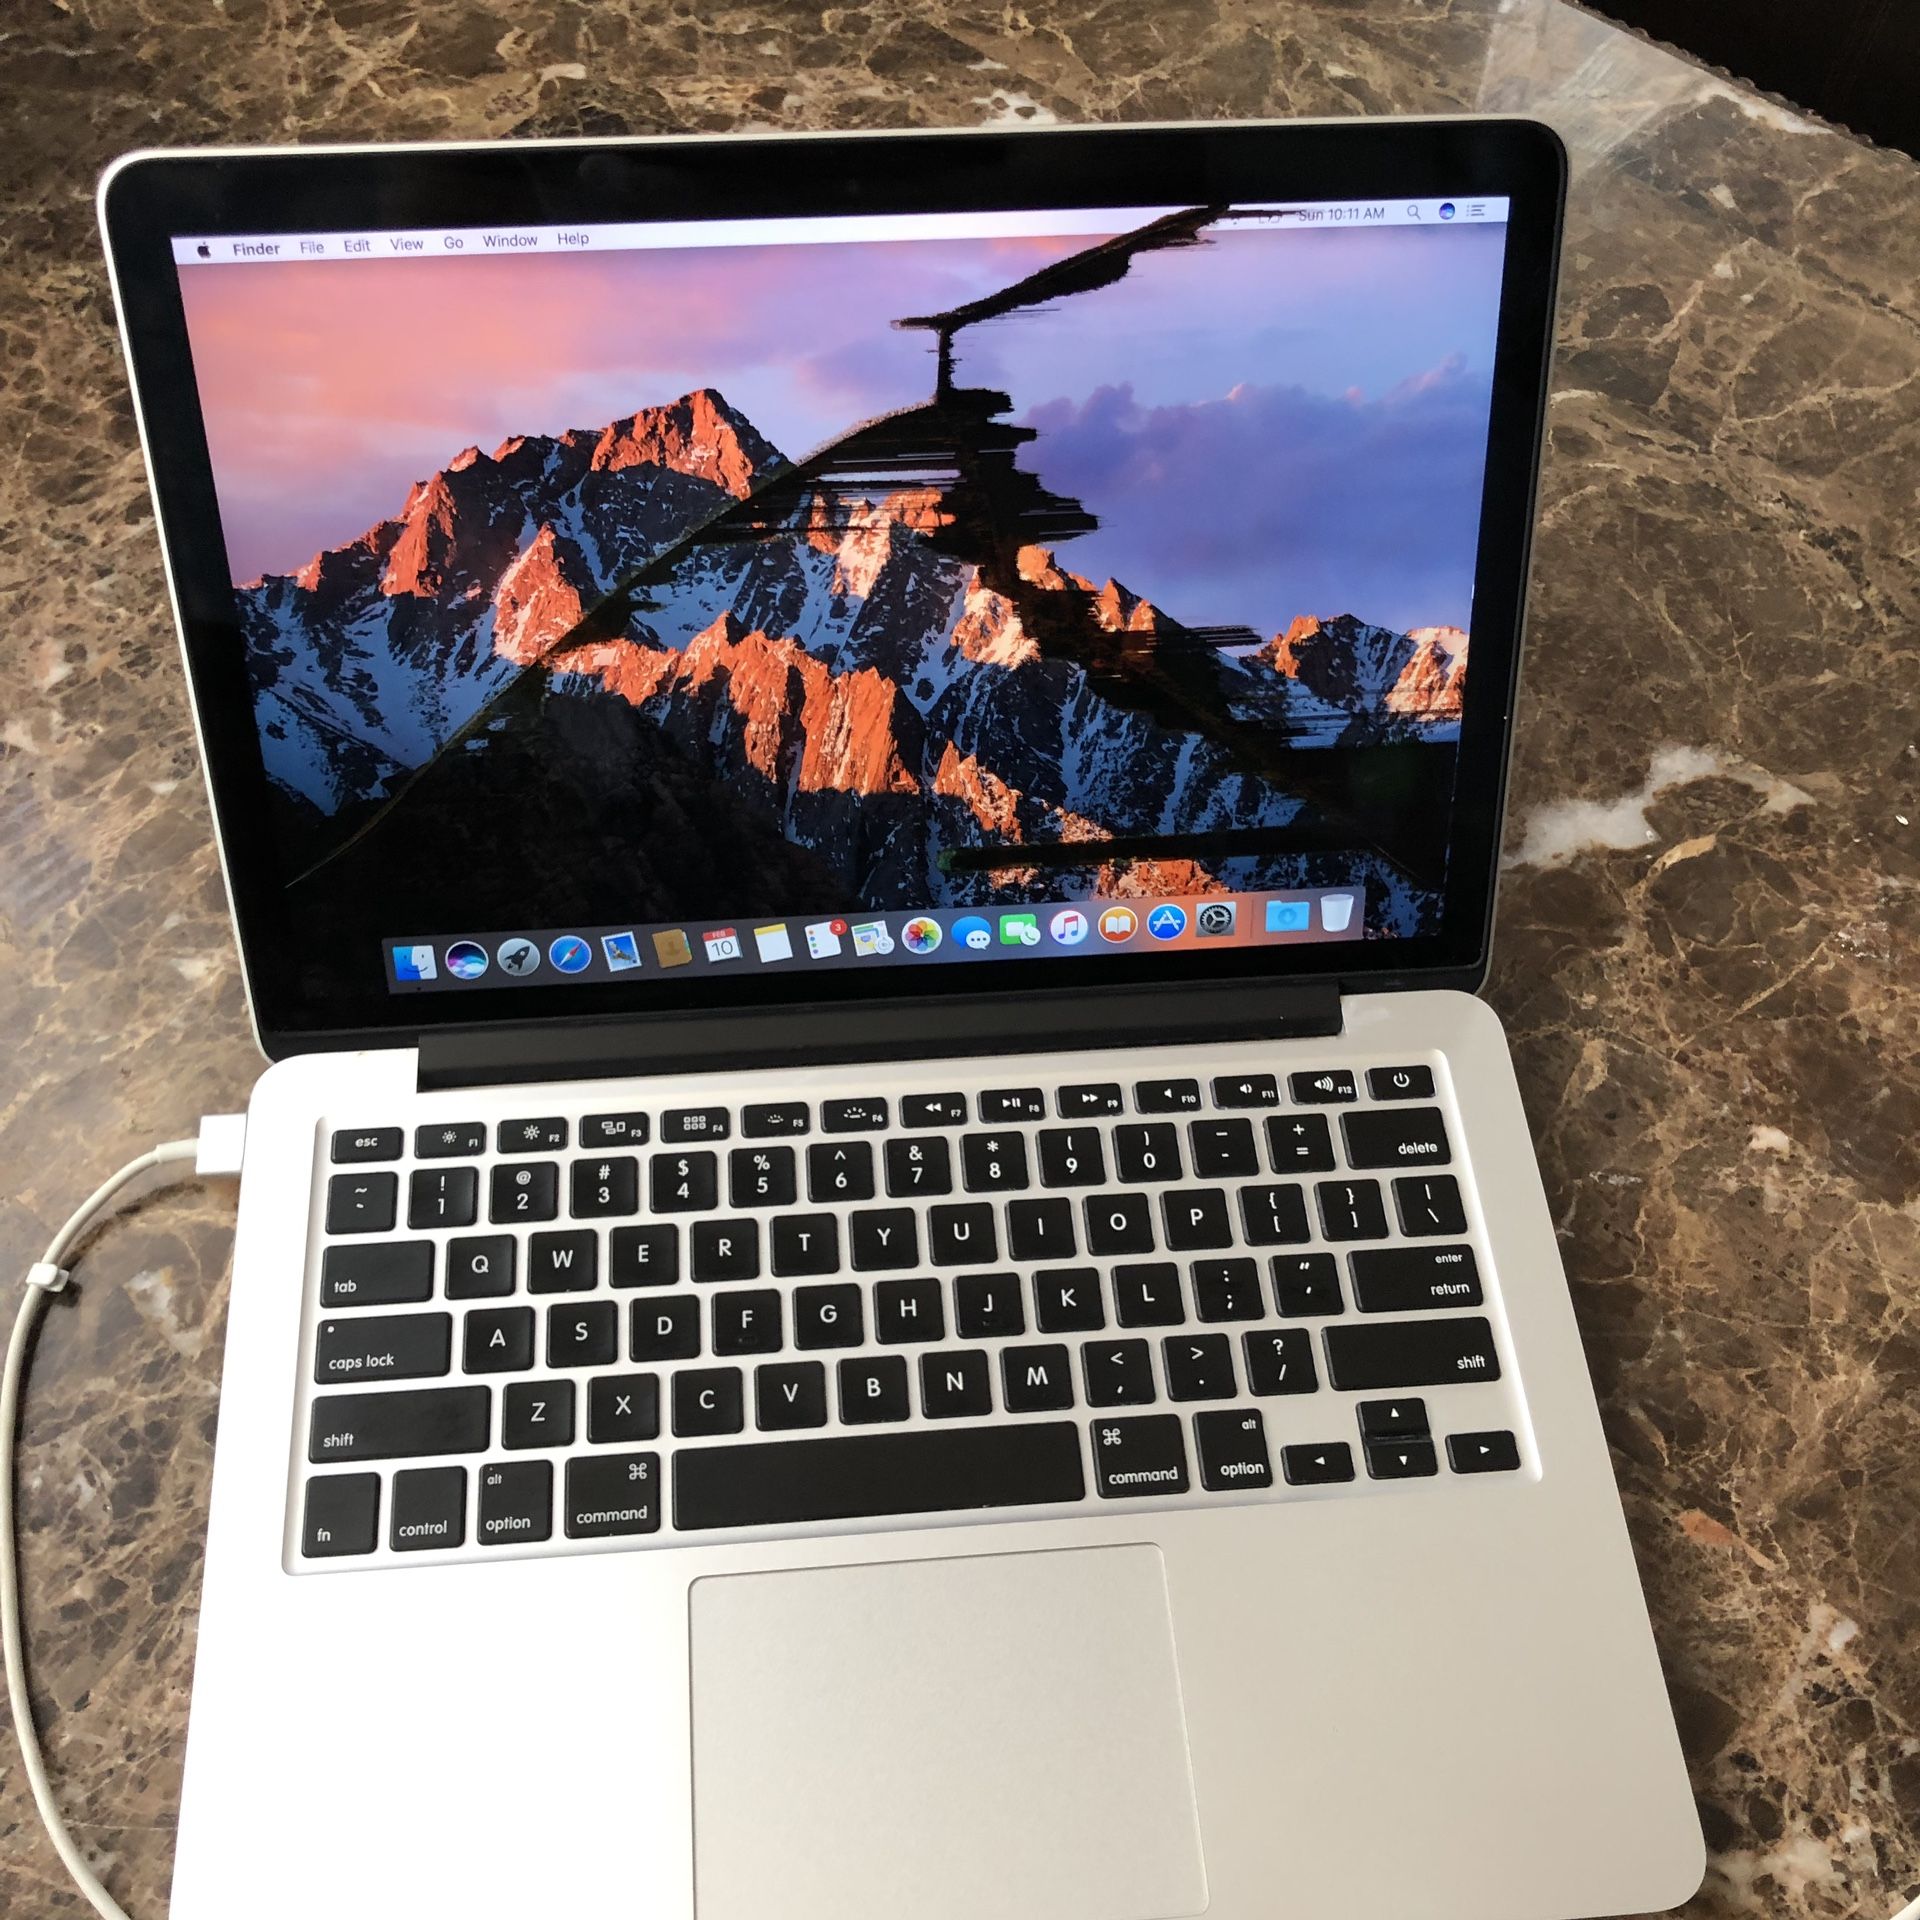 MacBook Pro 13” (late 2012 model) cracked screen